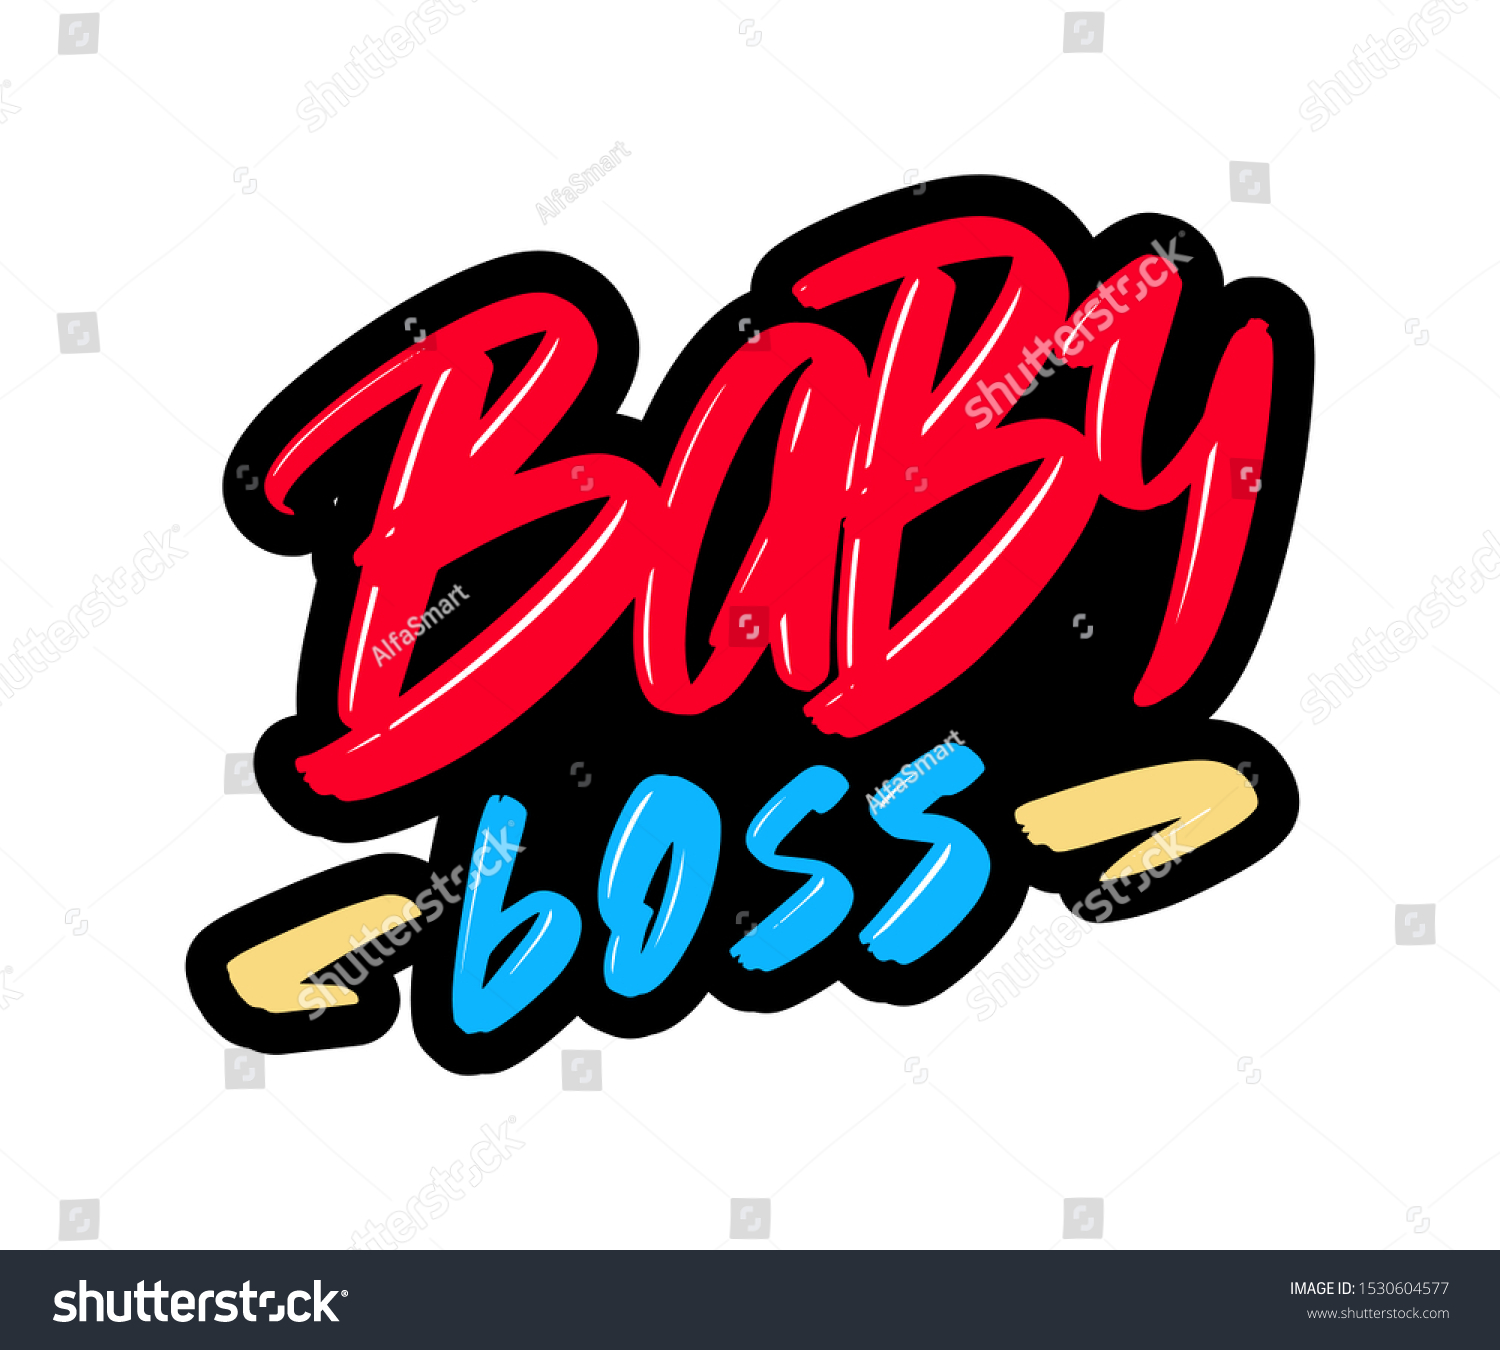 Baby Boss Cartoon Brush Lettering Text Stock Vector Royalty Free 1530604577